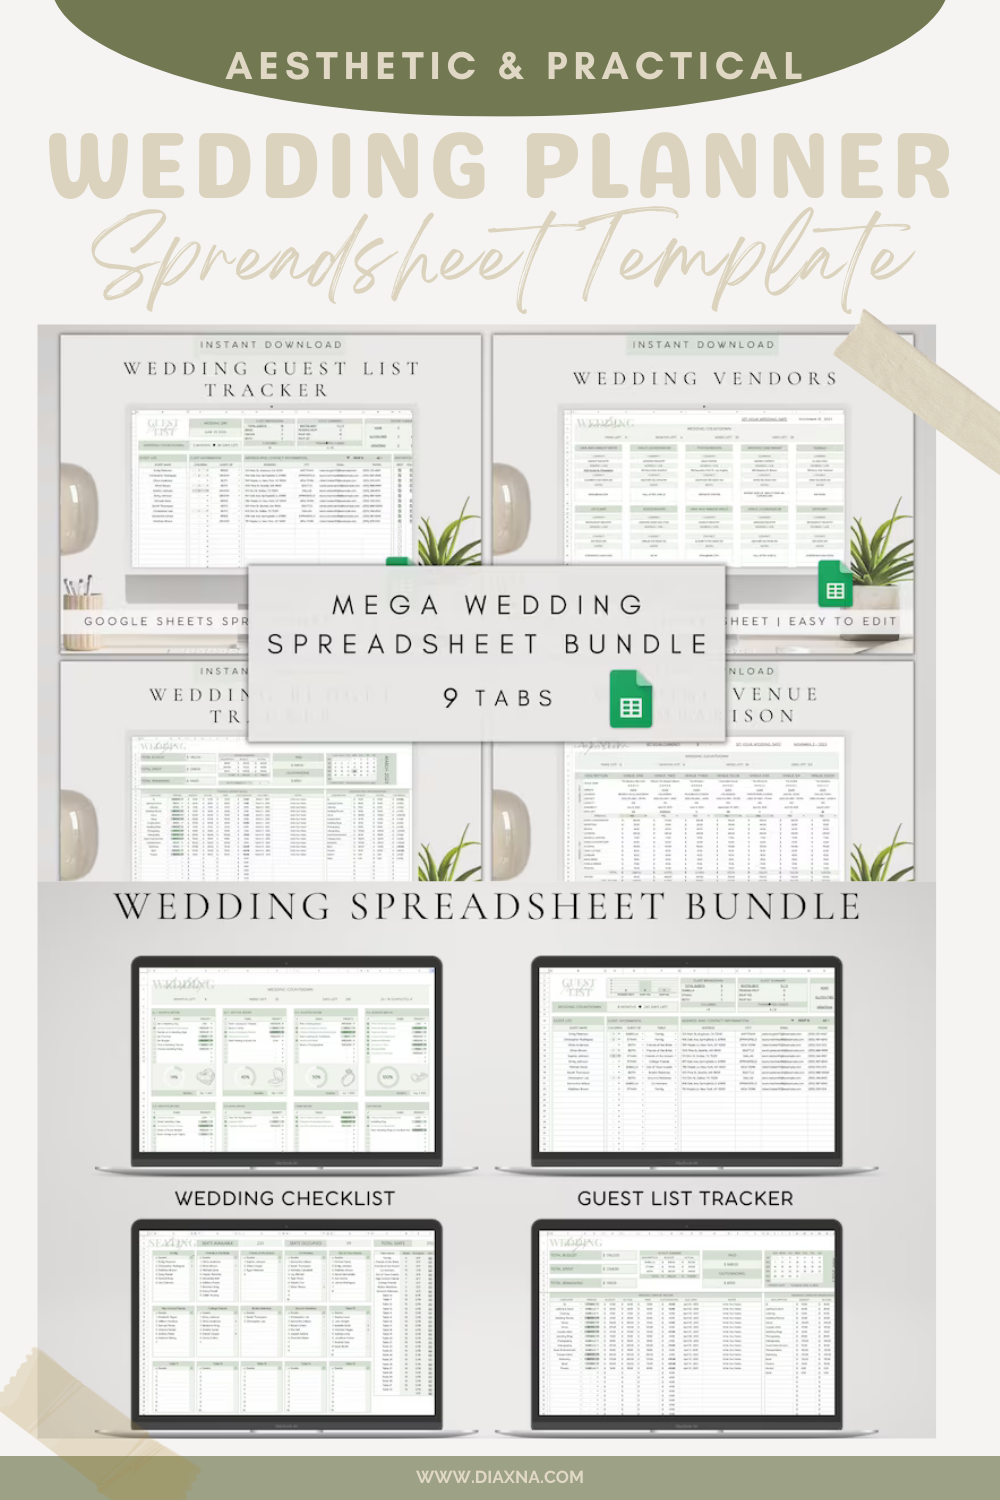 Wedding Planning Made Easy: Top Aesthetic Wedding Planner Spreadsheet ...